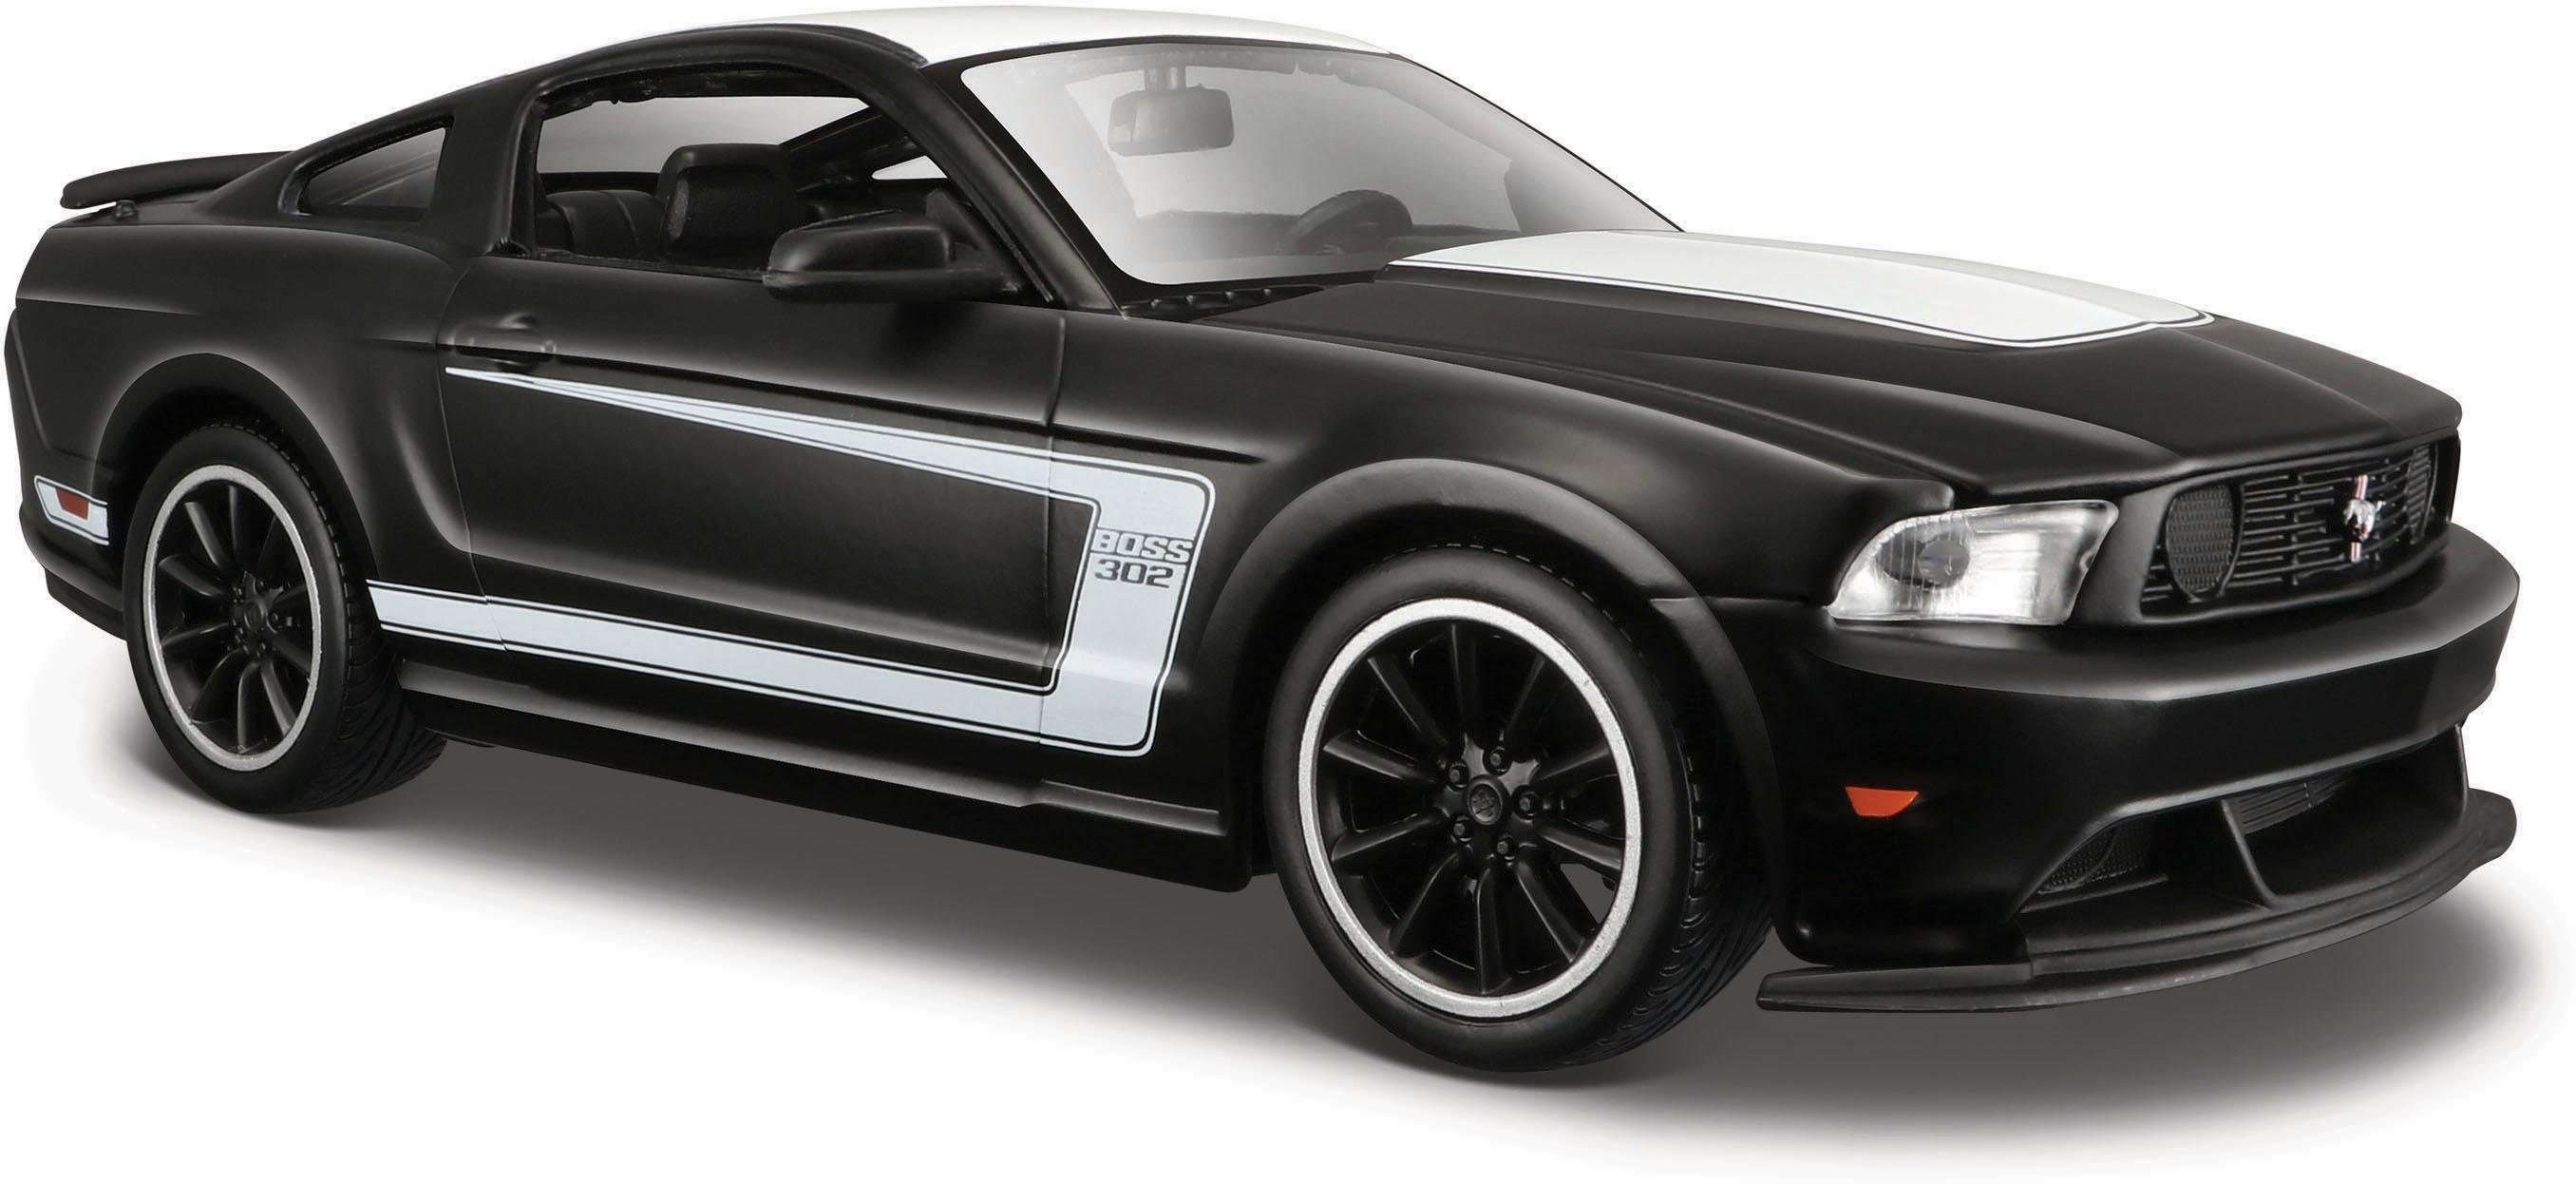 Maisto® Auto op schaal Dull Collection, Ford Mustang Boss 302, zwart van je bij | OTTO